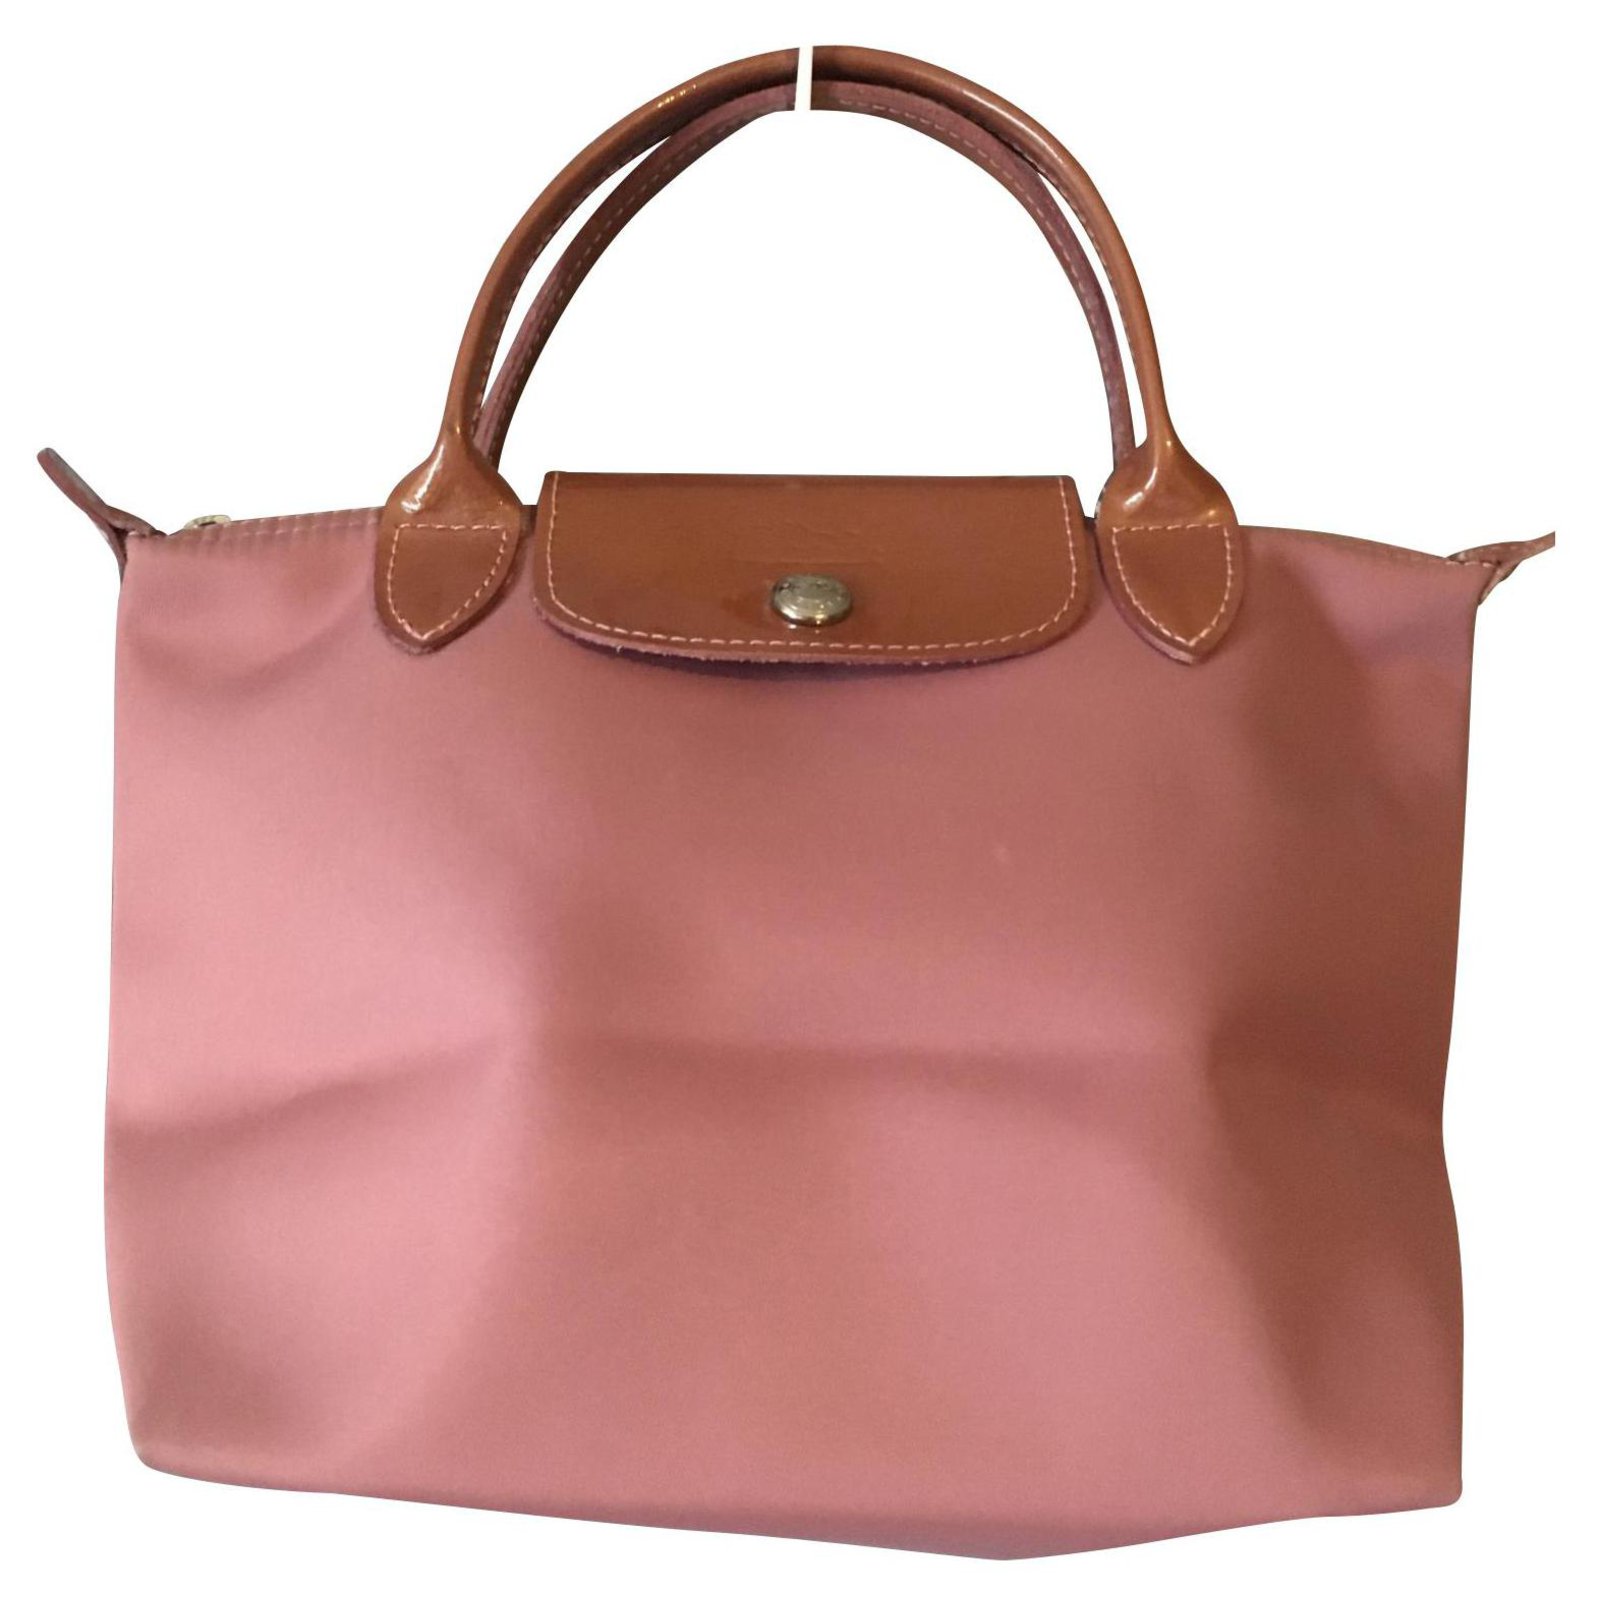 Powder pink bag Longchamp size S